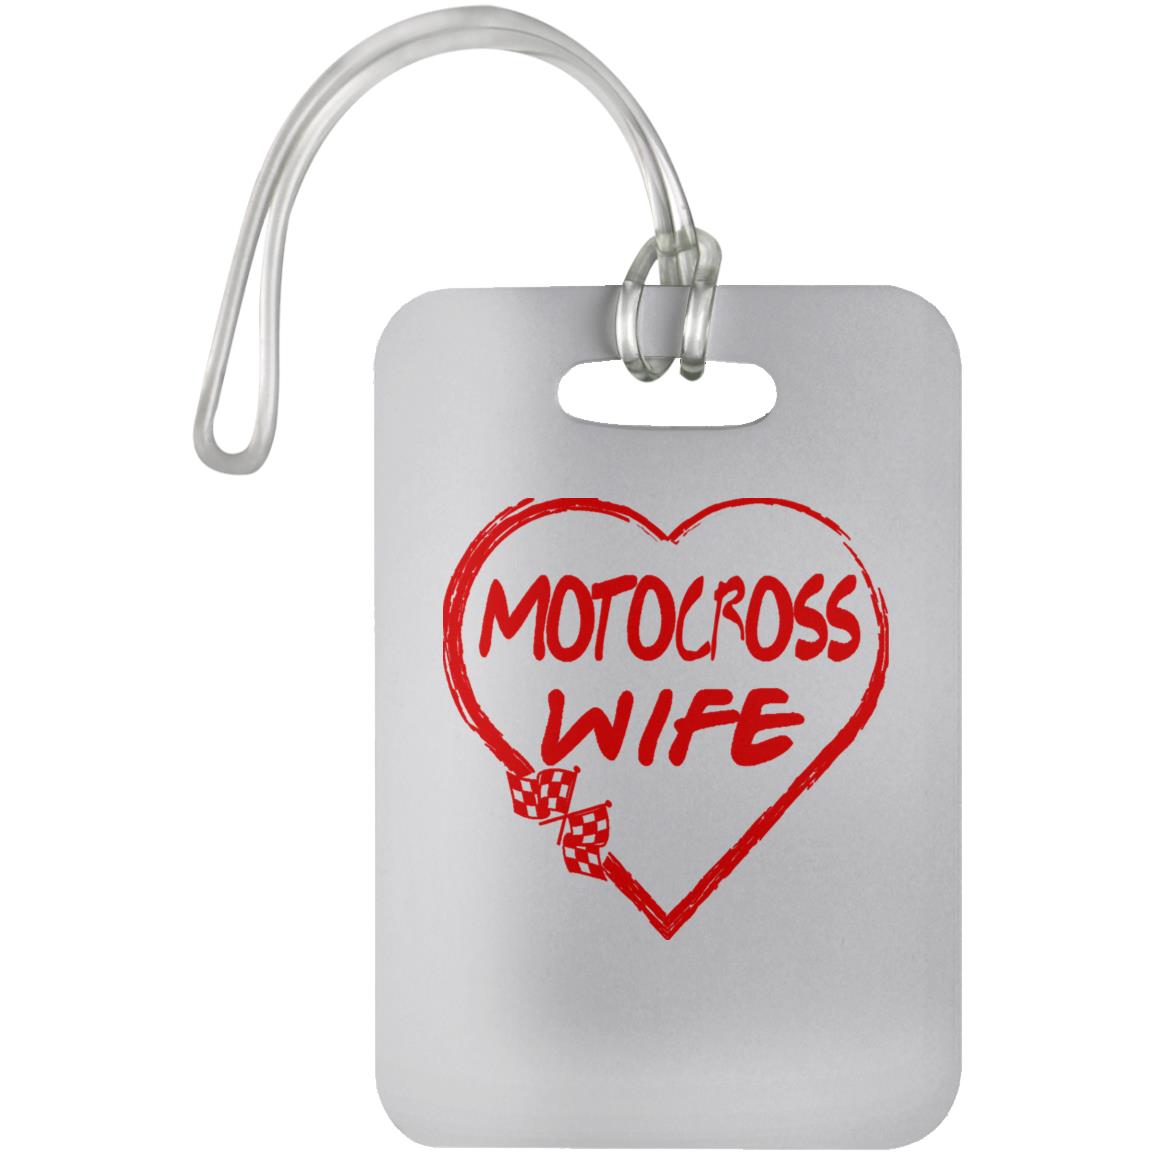 Motocross Wife Luggage Bag Tag